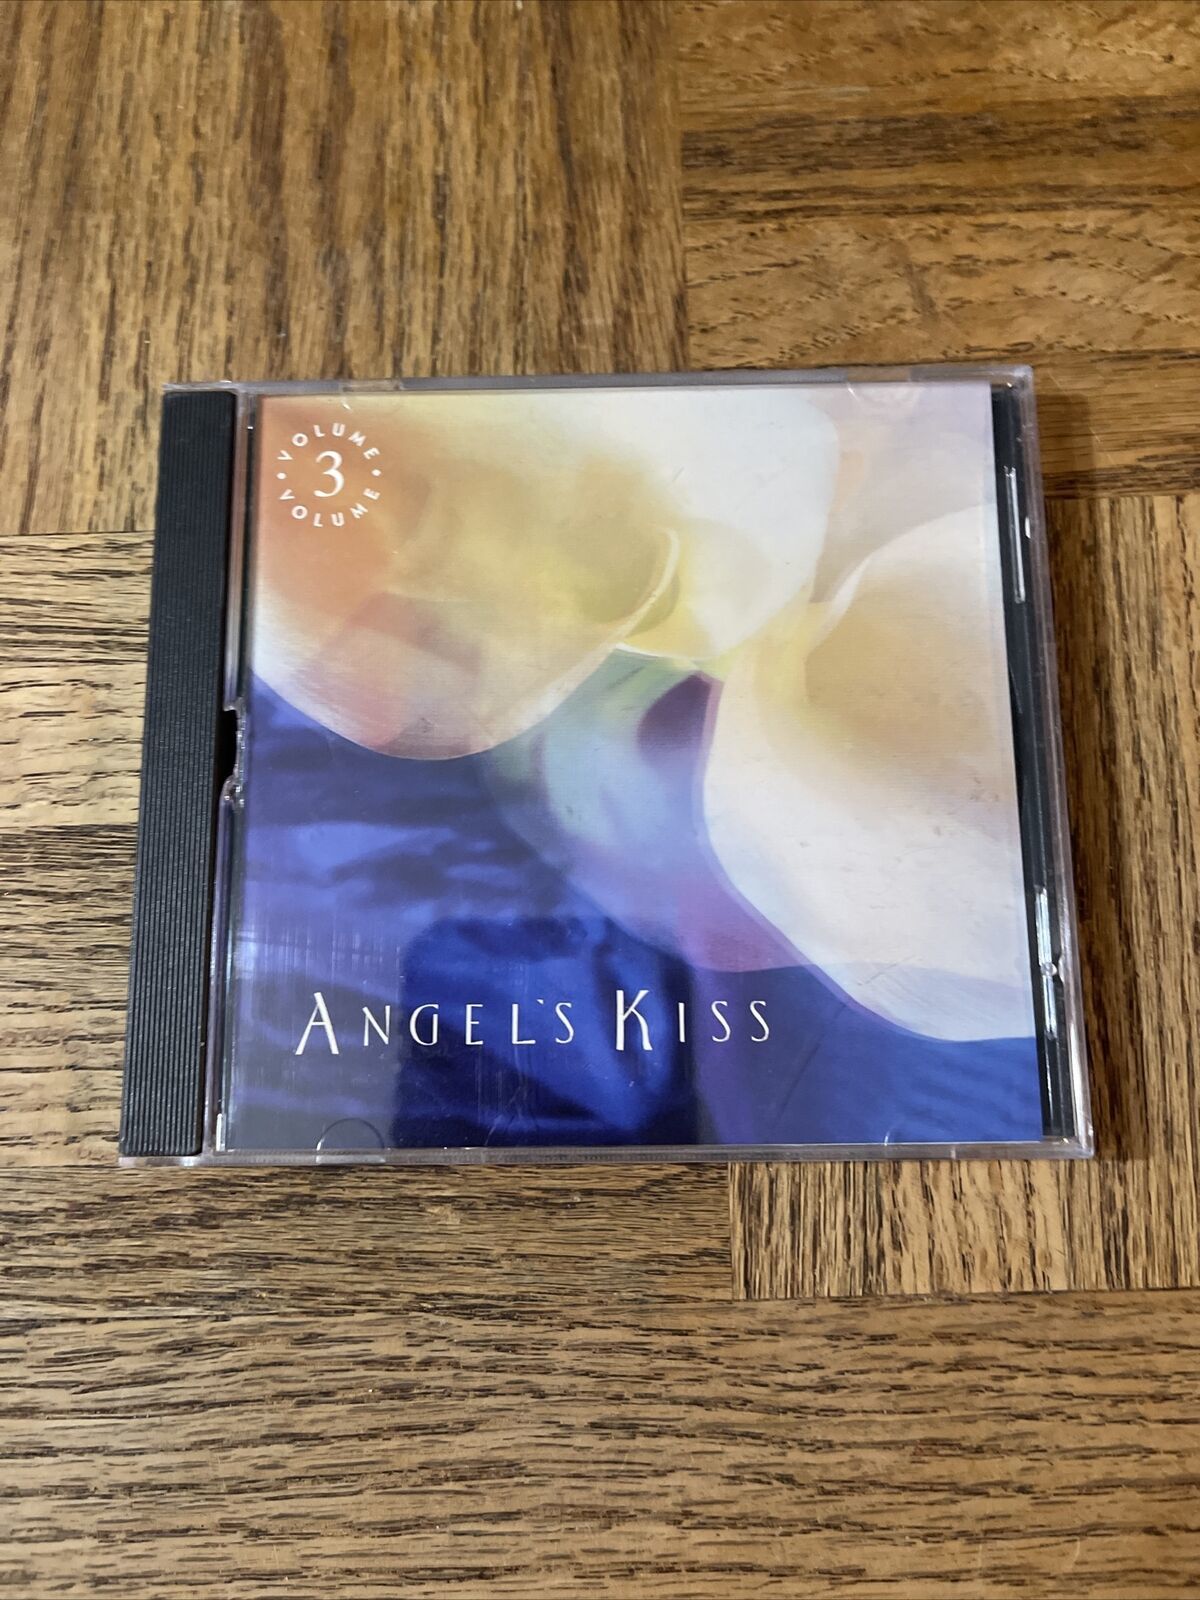 Primary image for Angles Kiss CD